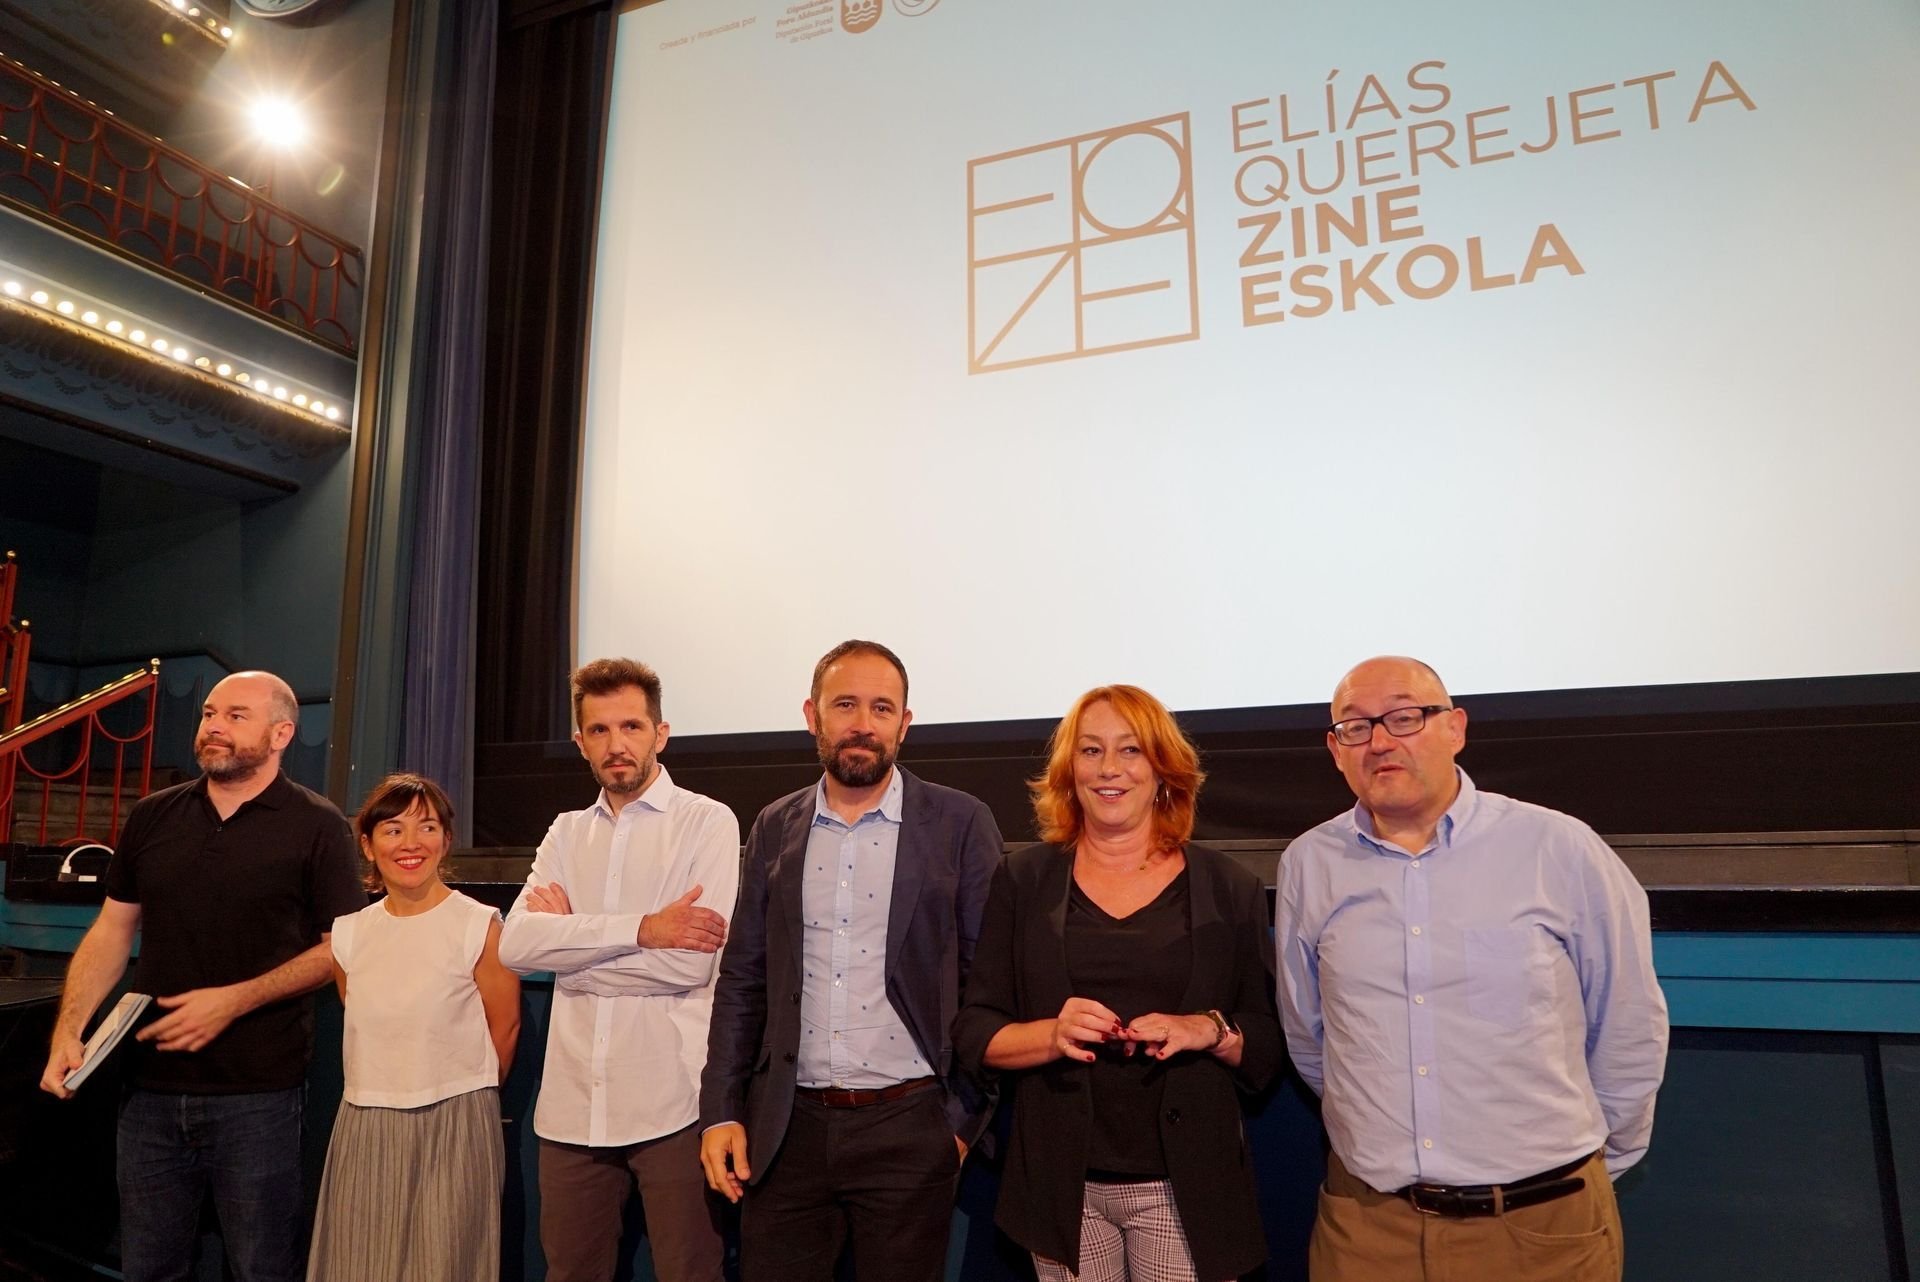 Presentation of Elías Querejeta Zine Eskola film school in Madrid